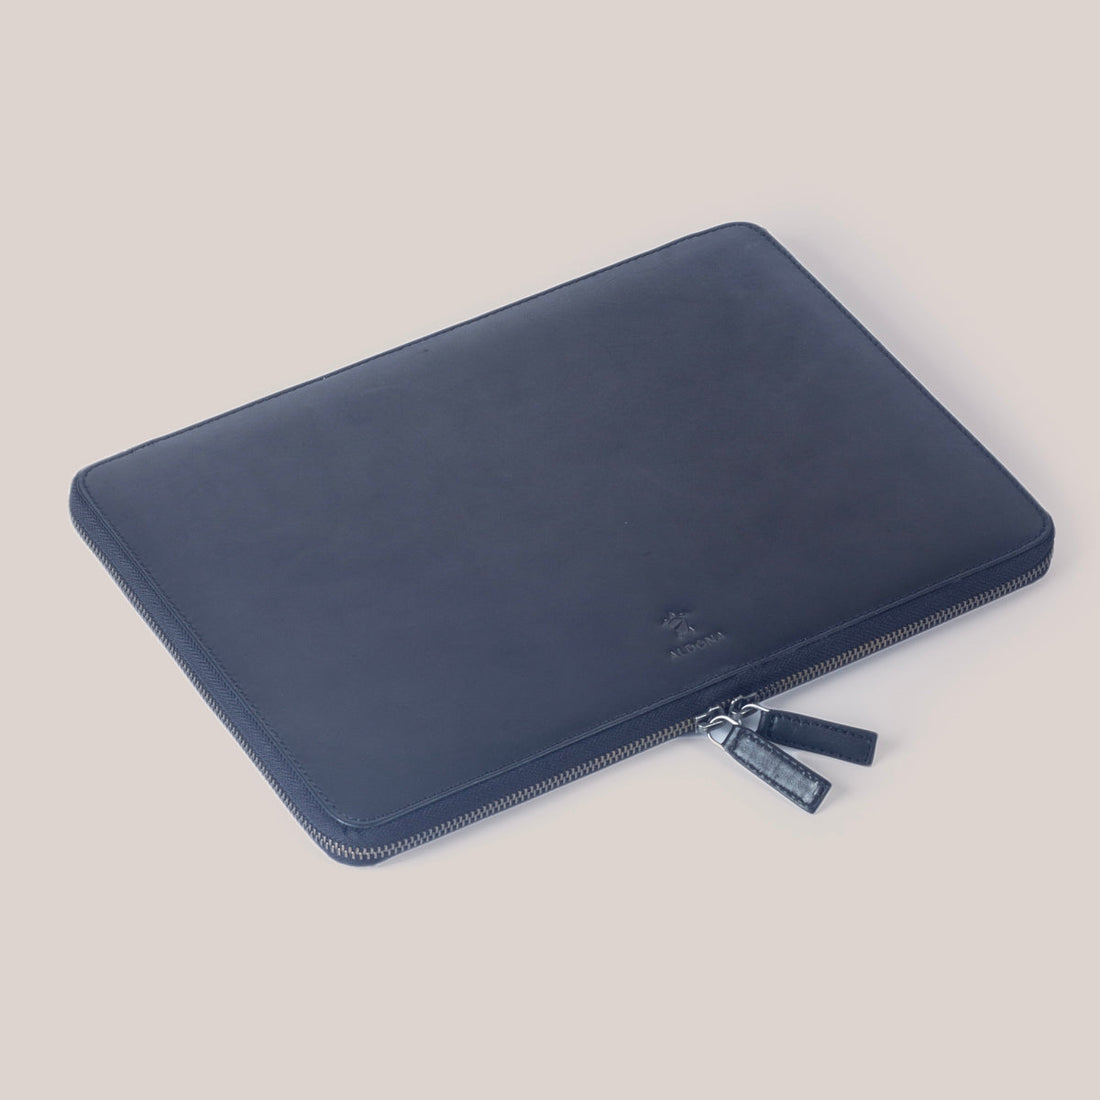 MacBook Zippered Laptop Case - Burnt Tobacco